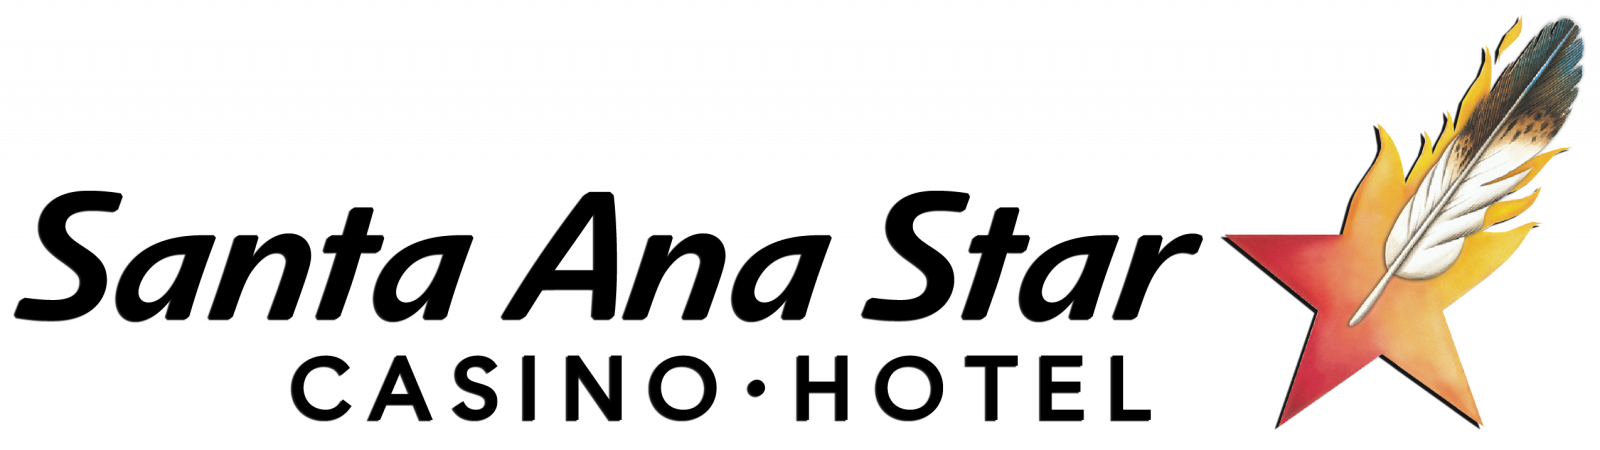 SASCH Logo black text